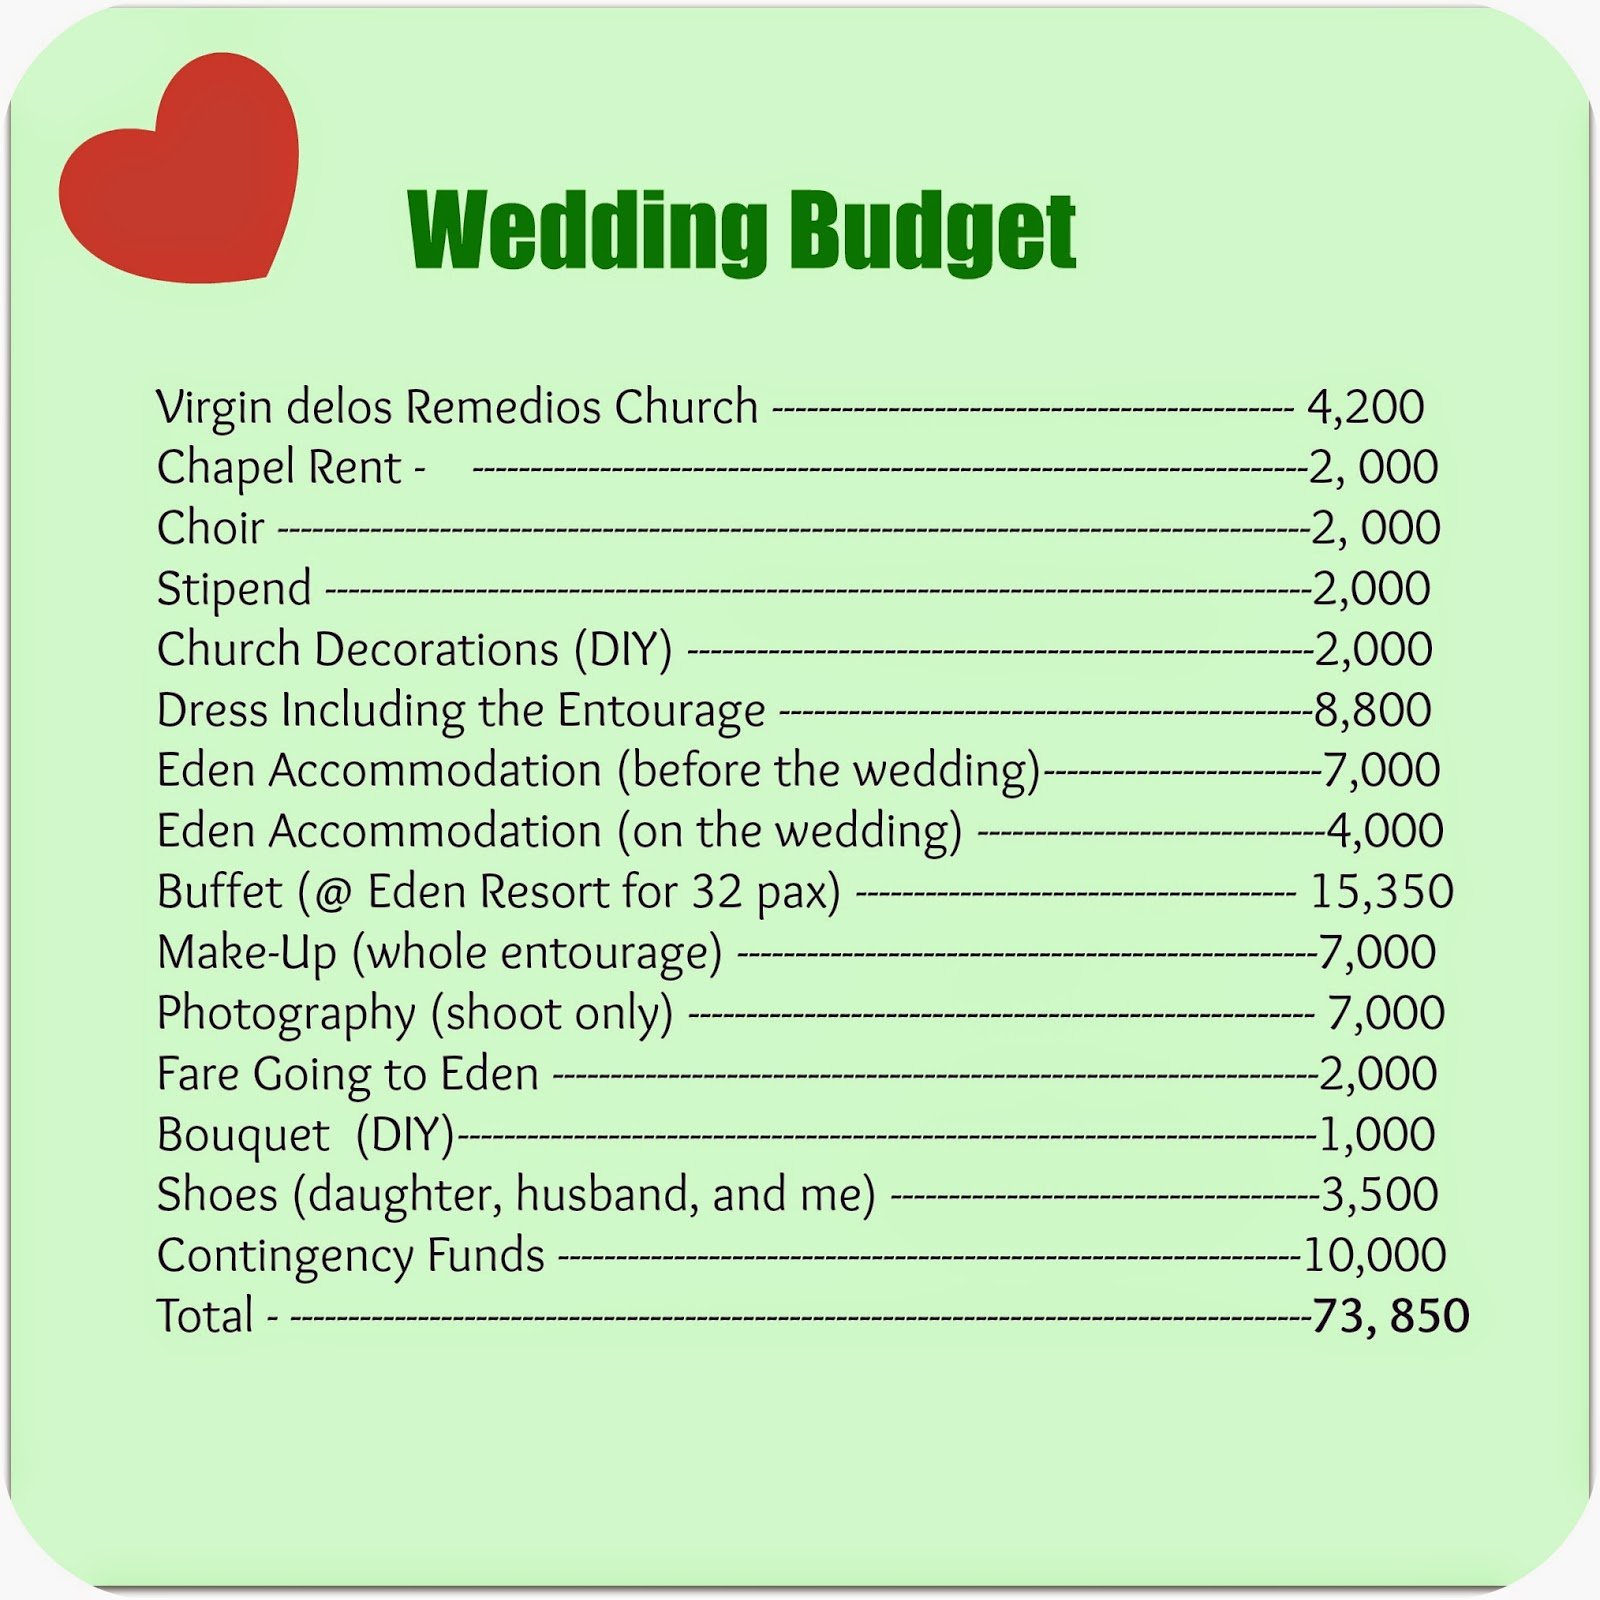 The Wedding Budget